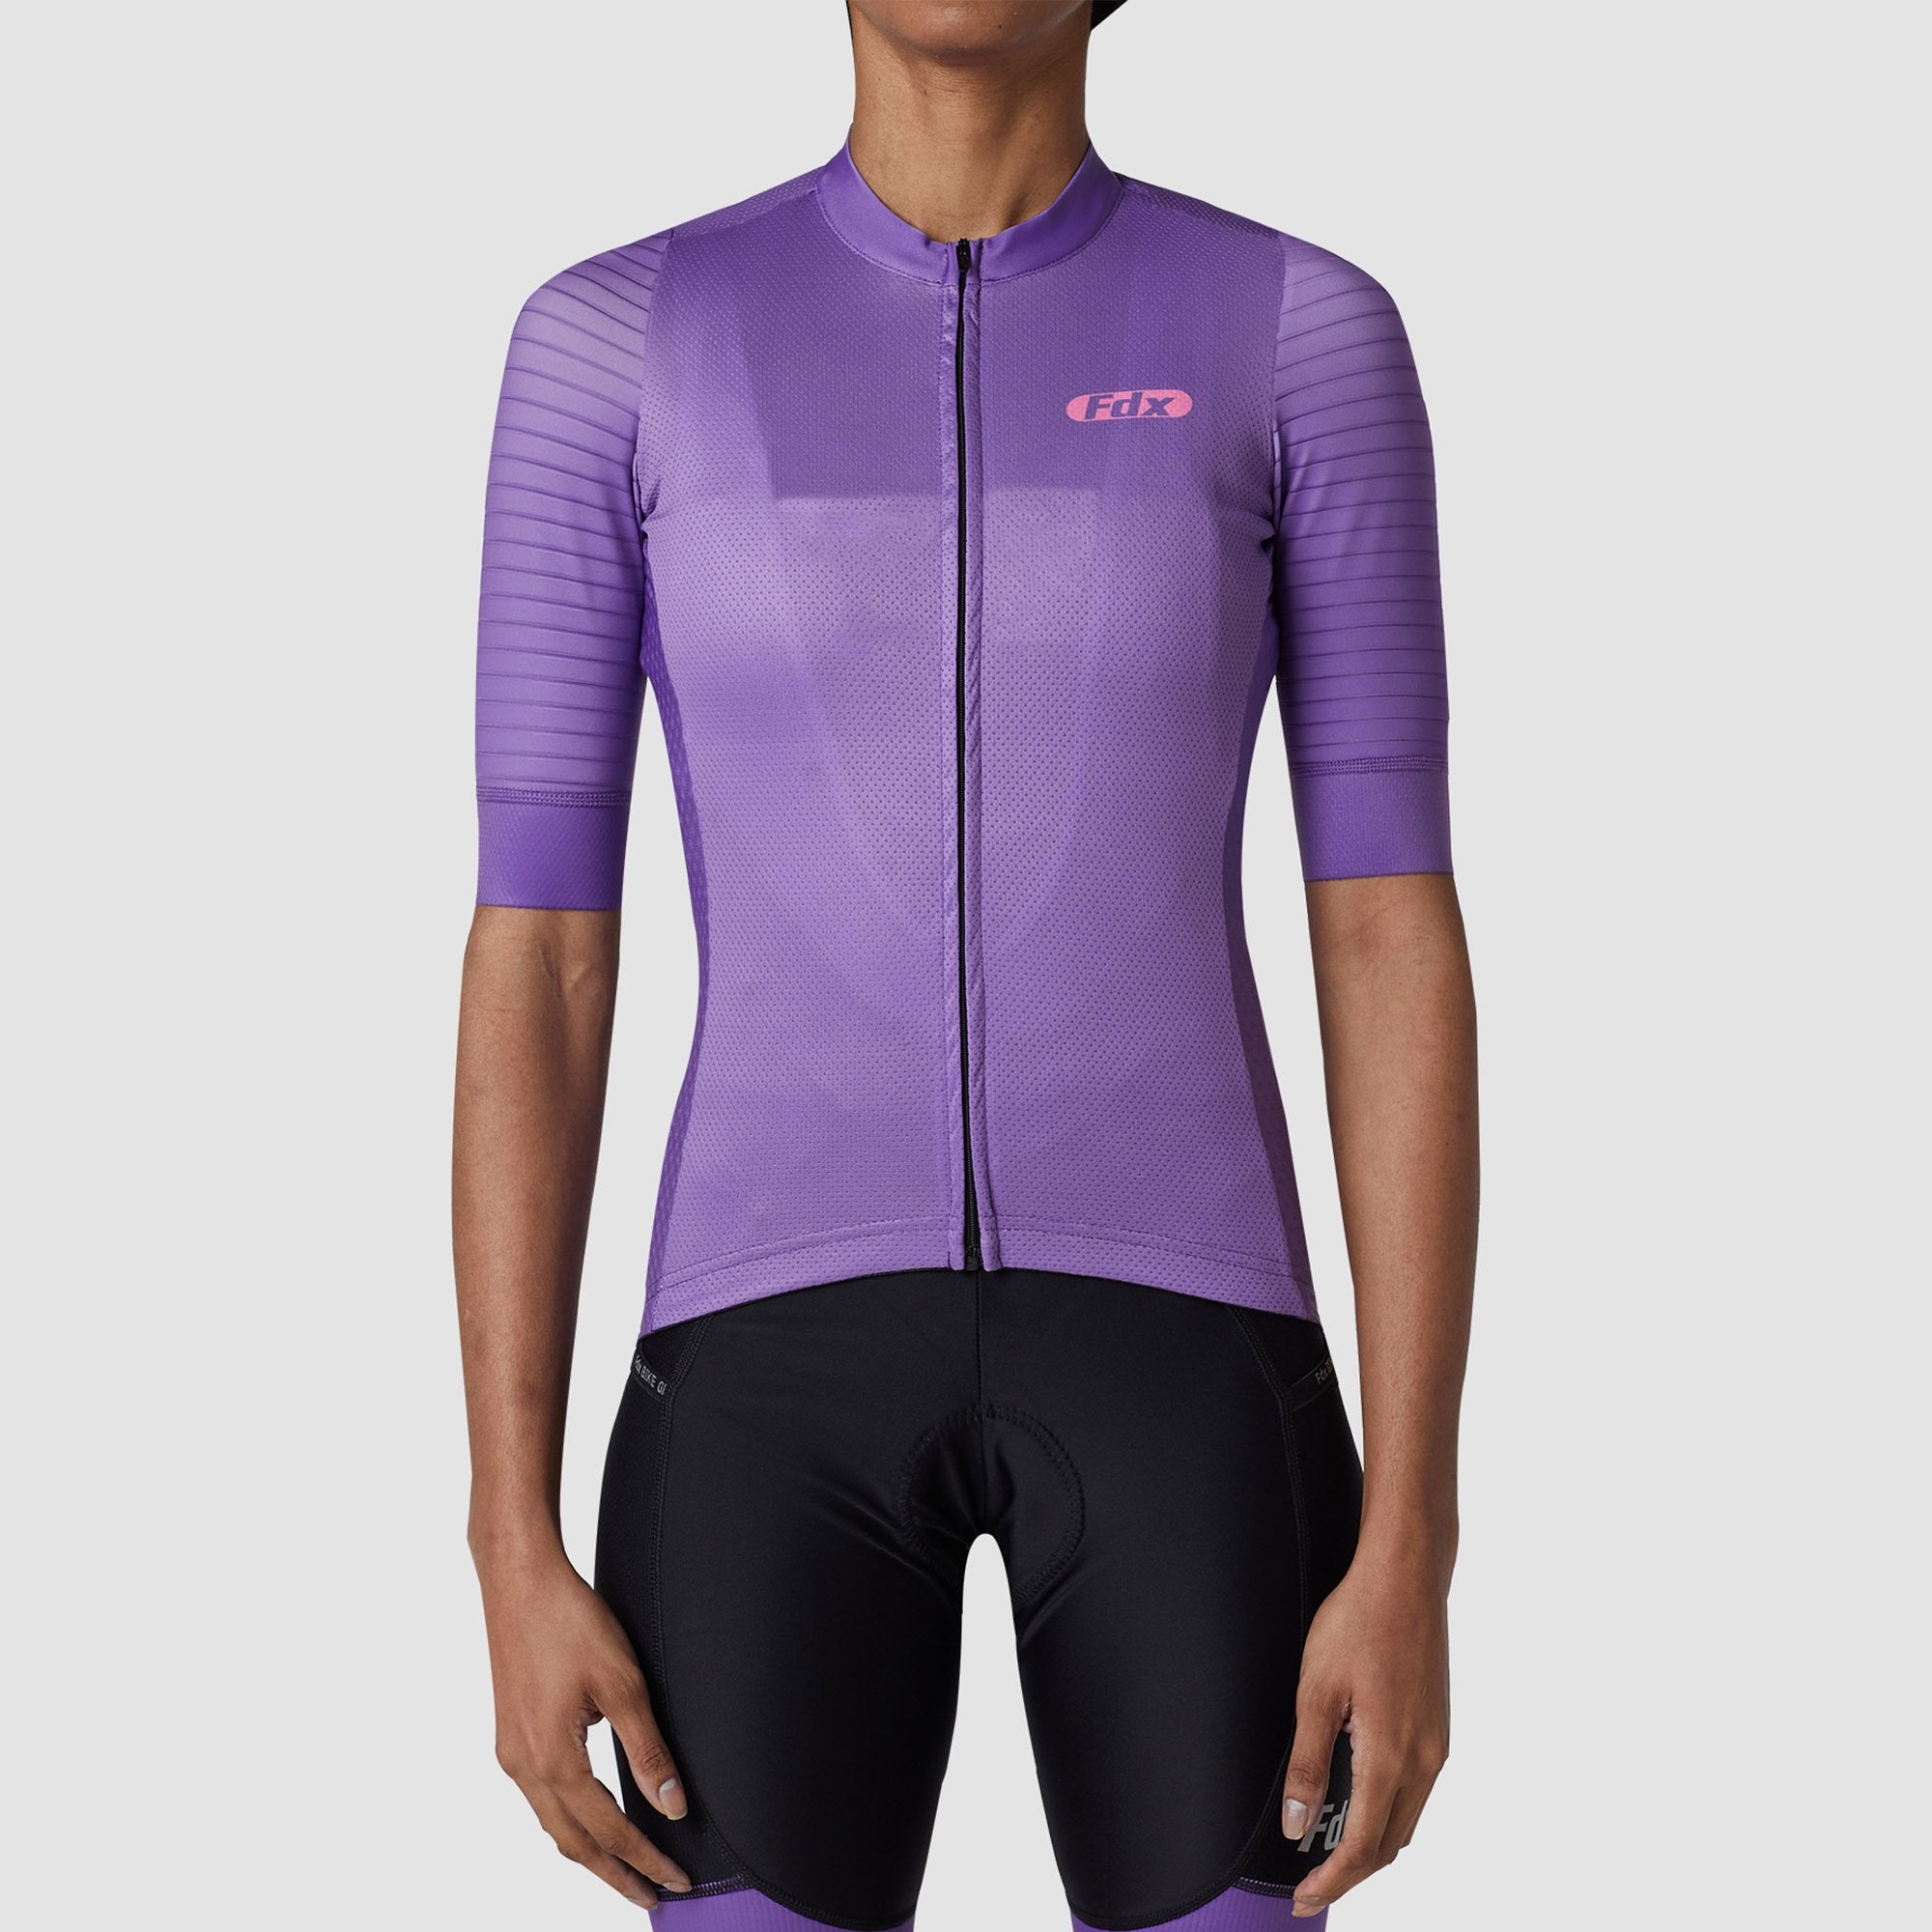 Fdx Womens Purple Short Sleeve Cycling Jersey for Summer Best Road Bike Wear Top Light Weight, Full Zipper, Pockets & Hi-viz Reflectors - Essential